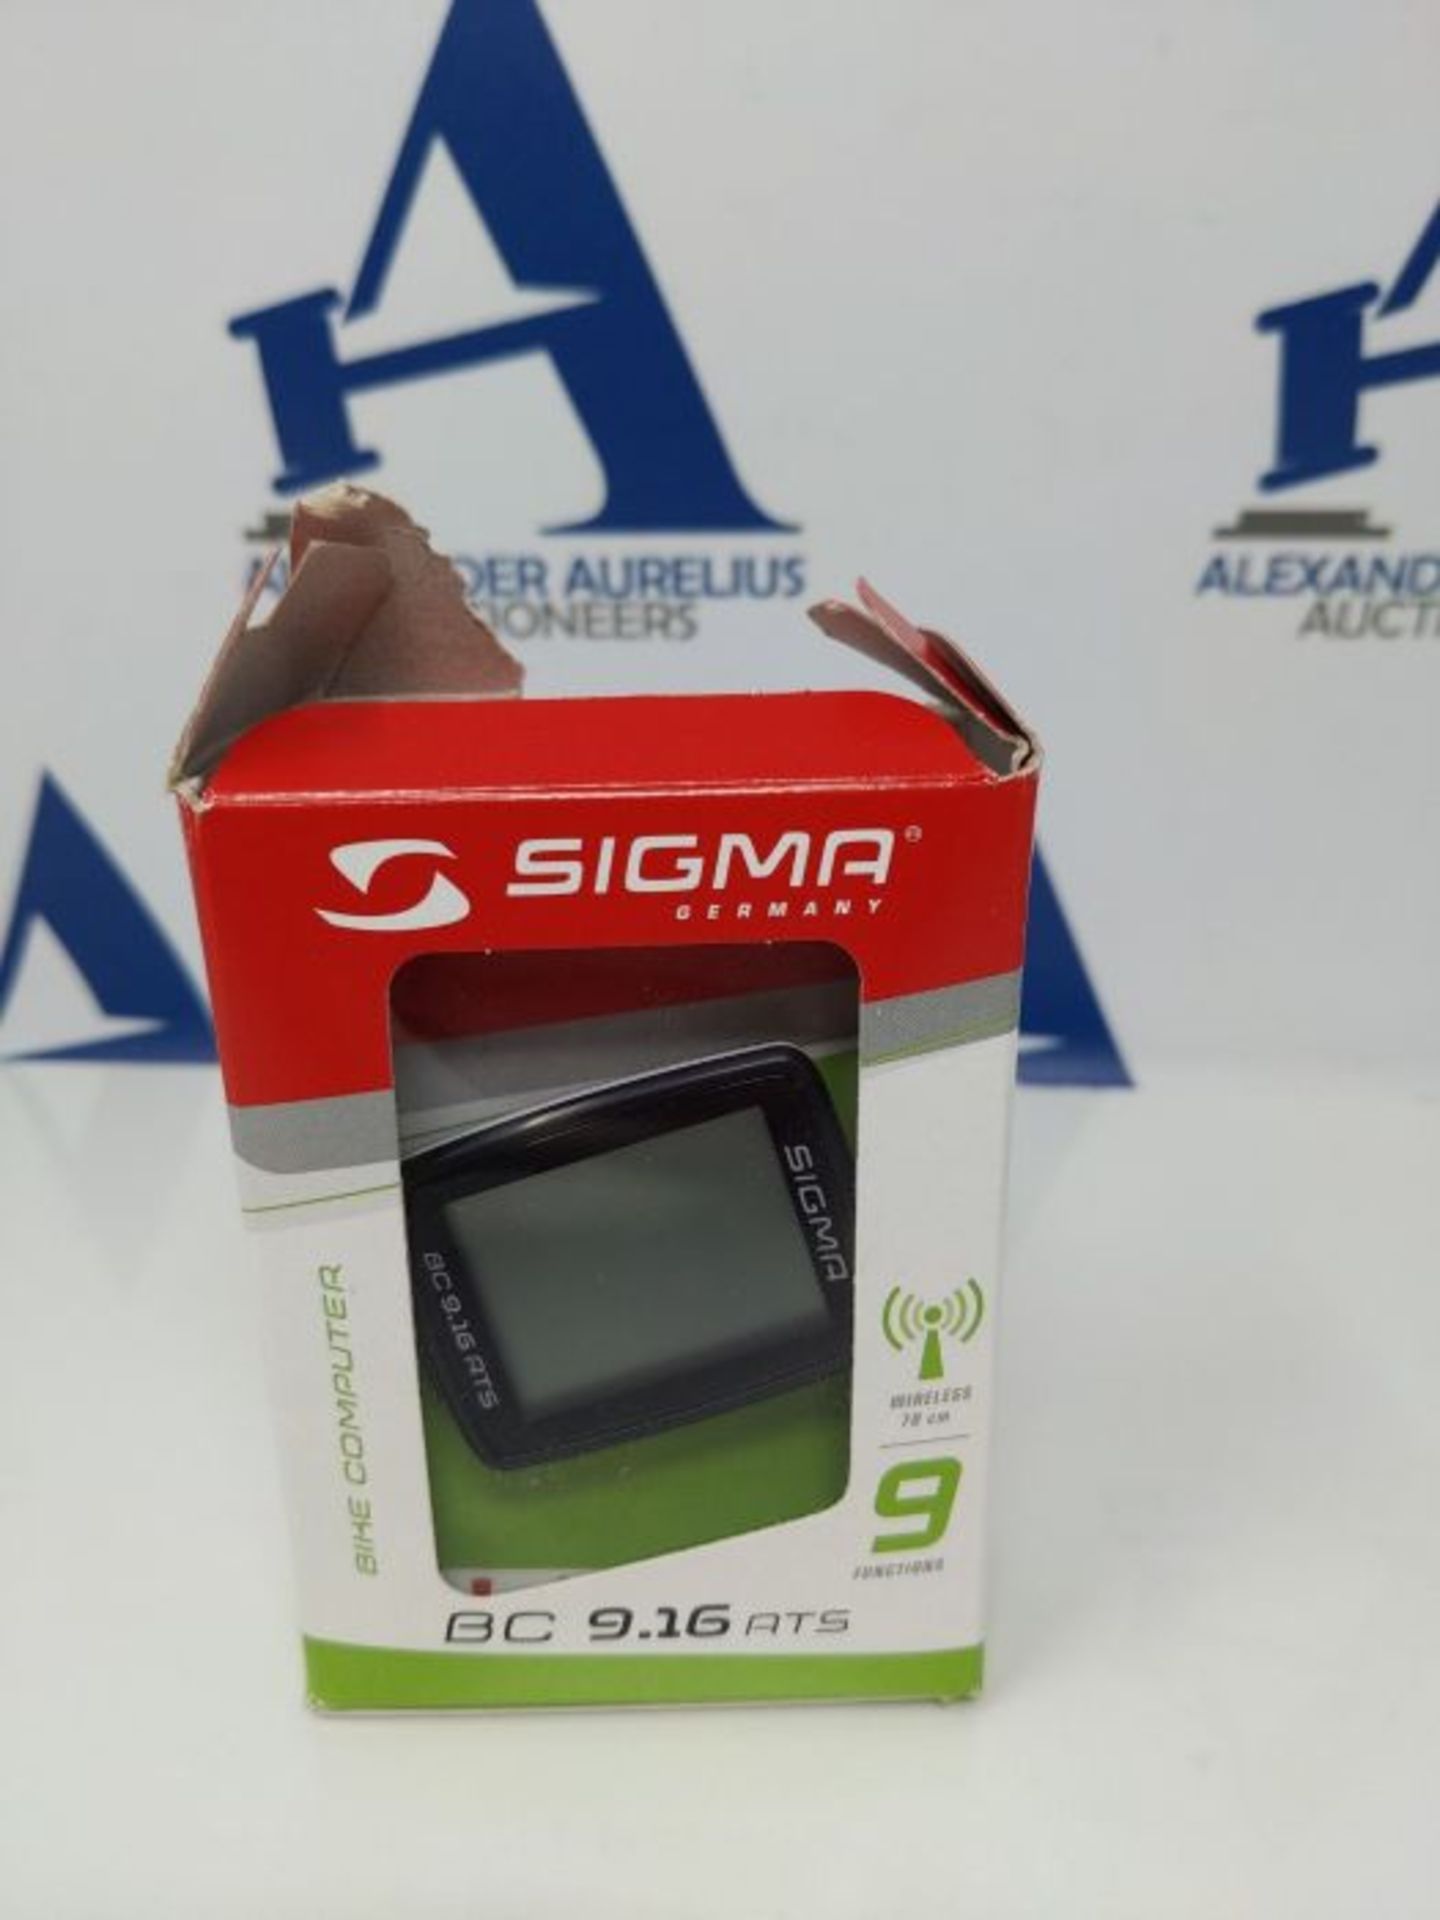 Sigma BC 9.16 ATS Unisex-Adult Wireless Bike Computer, Black, 3.5x7.8x11.3 - Image 2 of 3